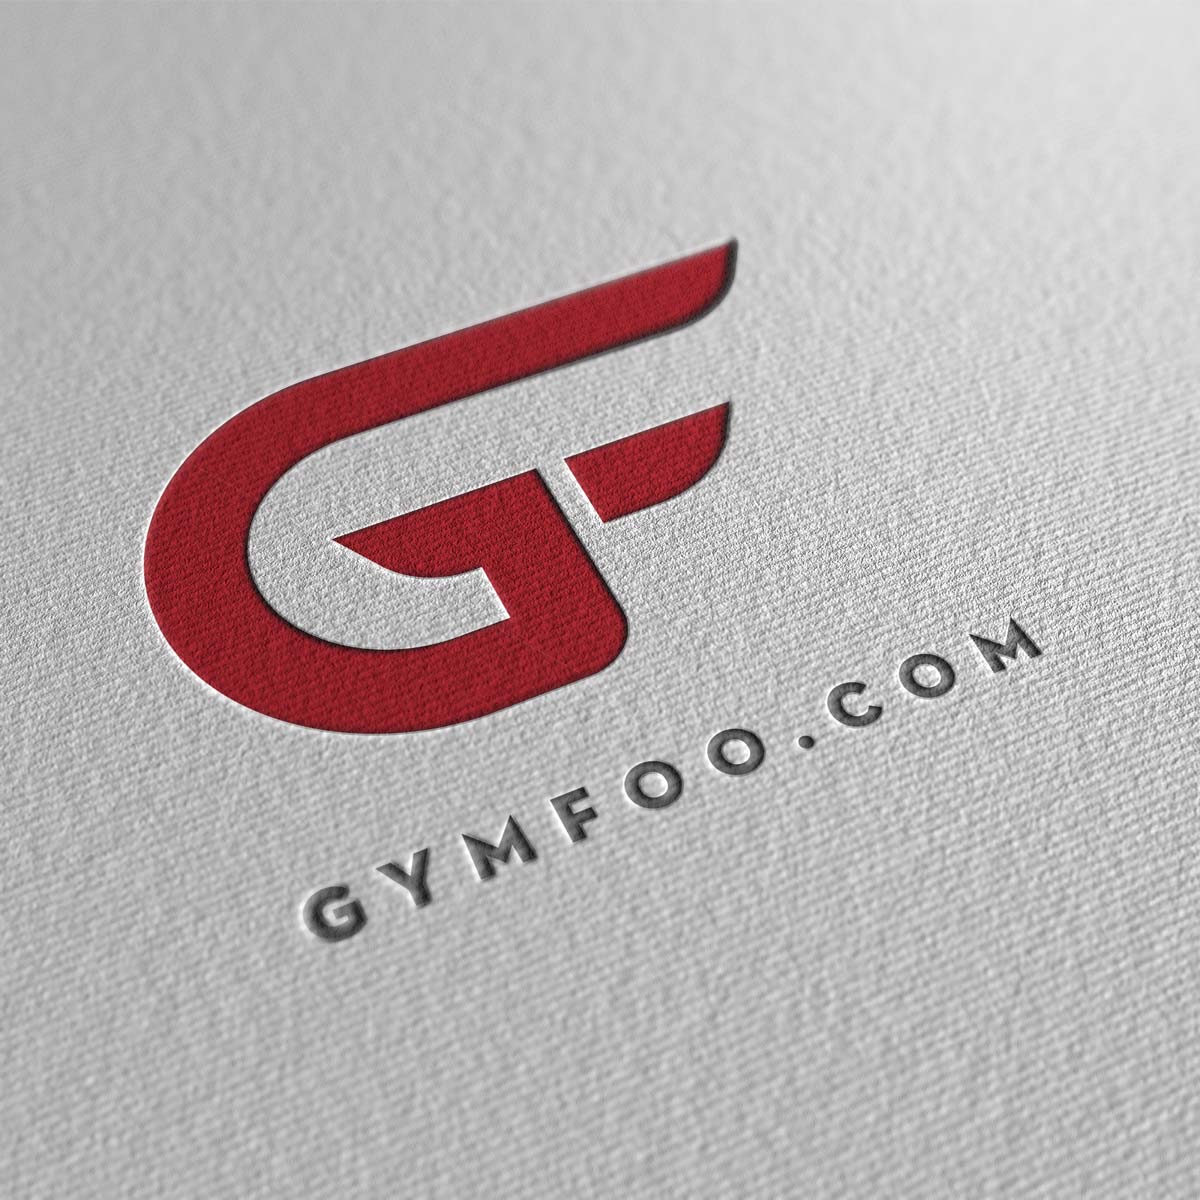 Gymfoo Branding